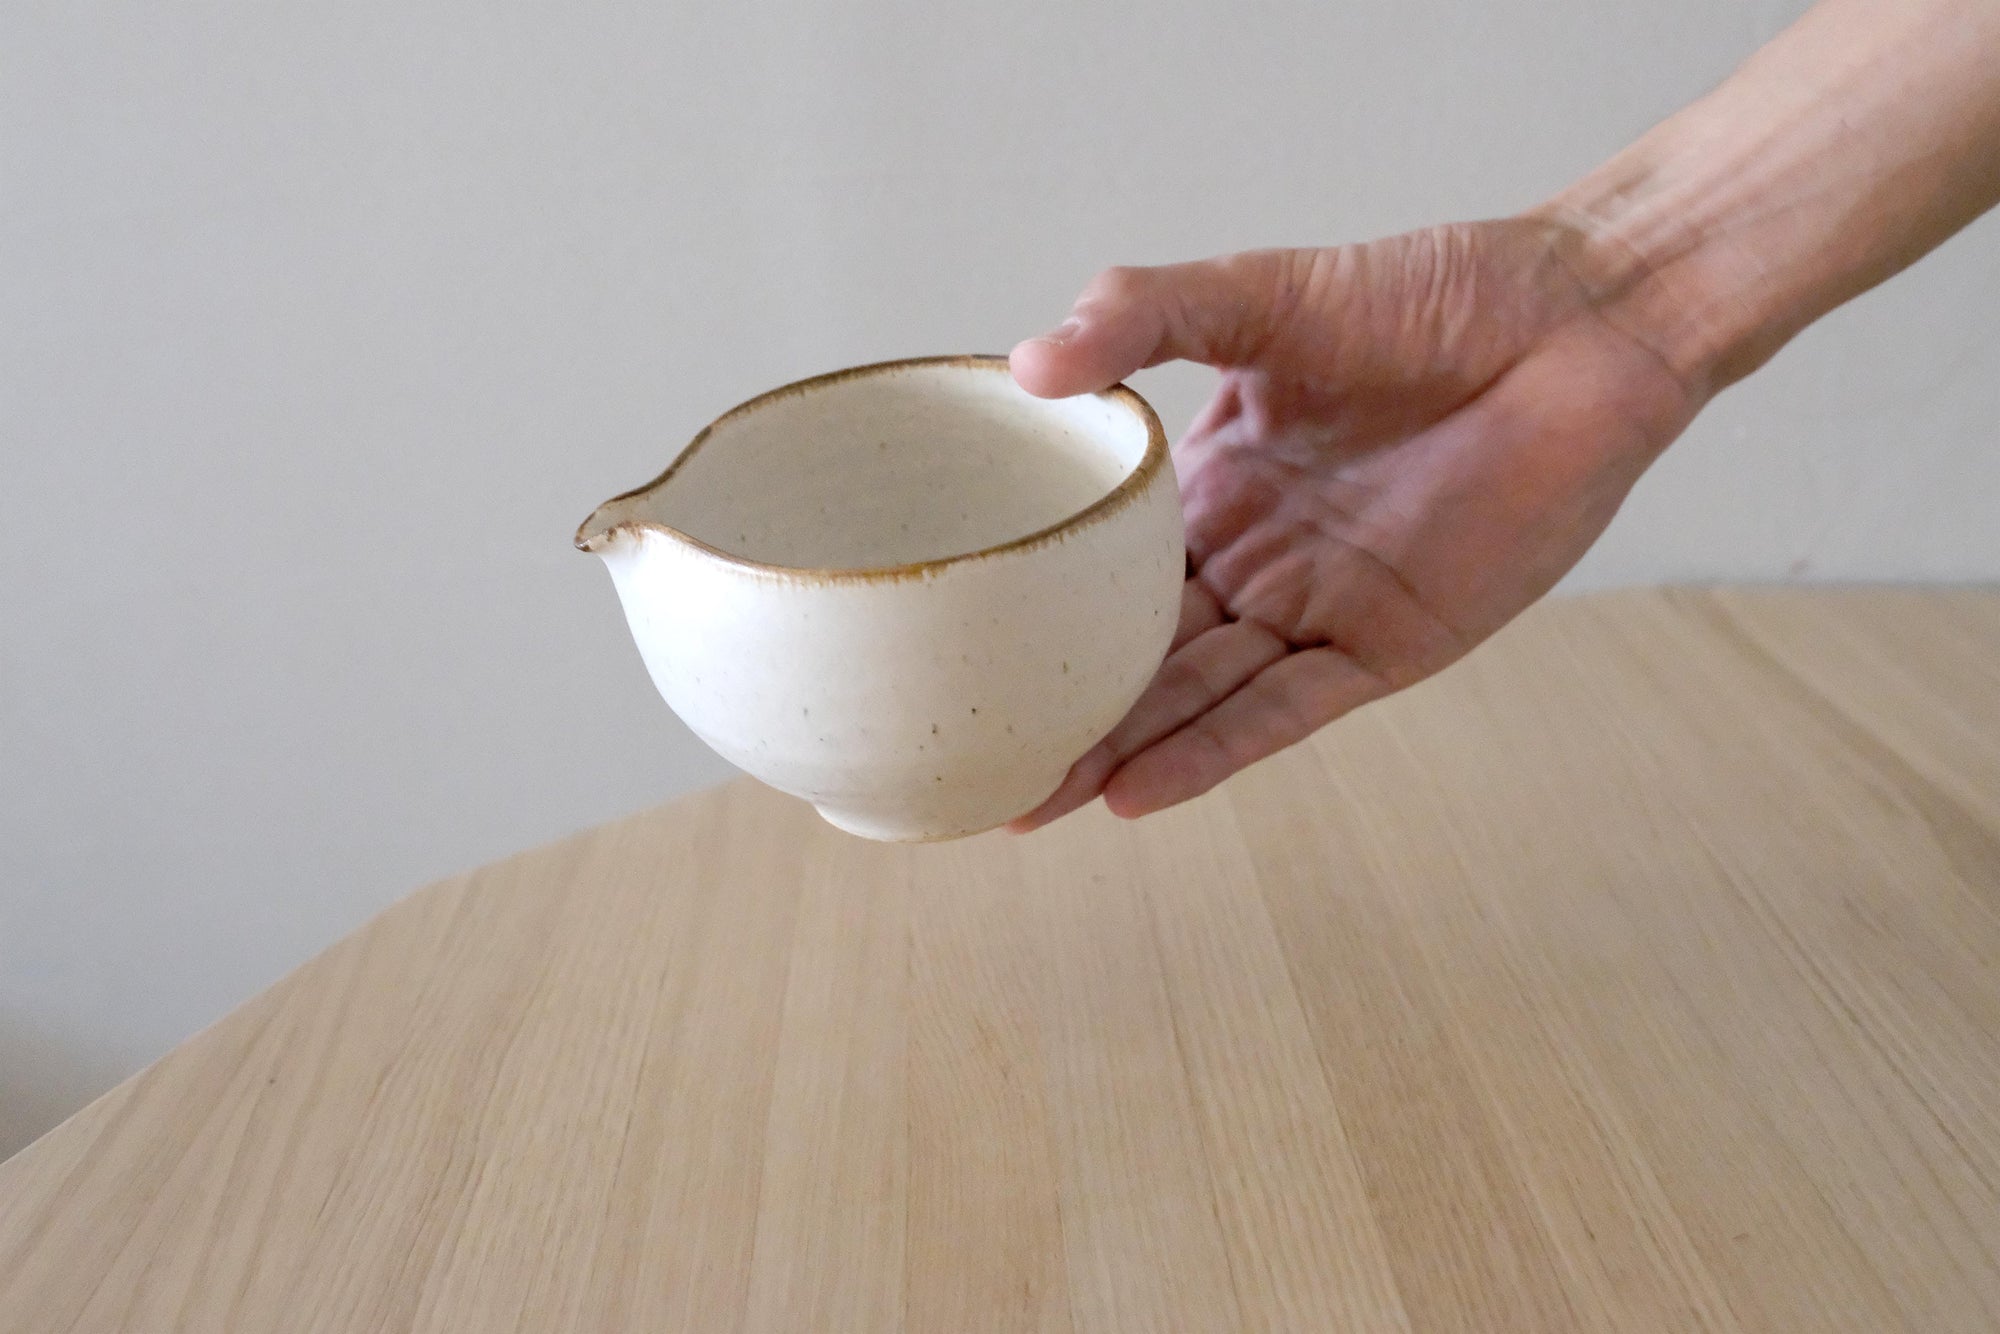 Matcha / tea lipped bowl - Original design crafted in Kyoto, Kiyomizu yaki